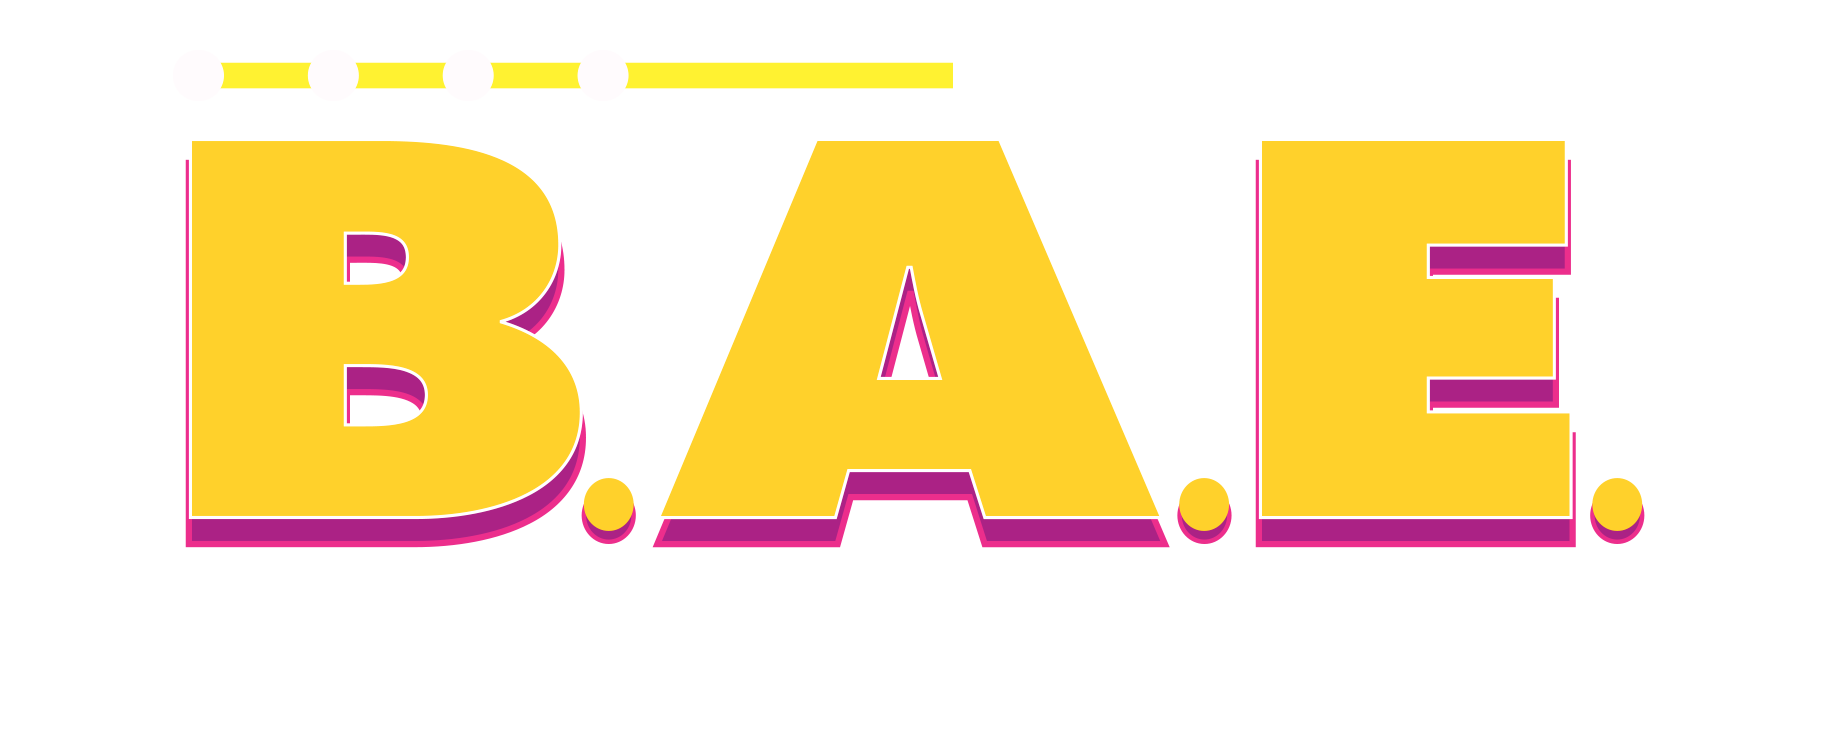 Black Art Expo